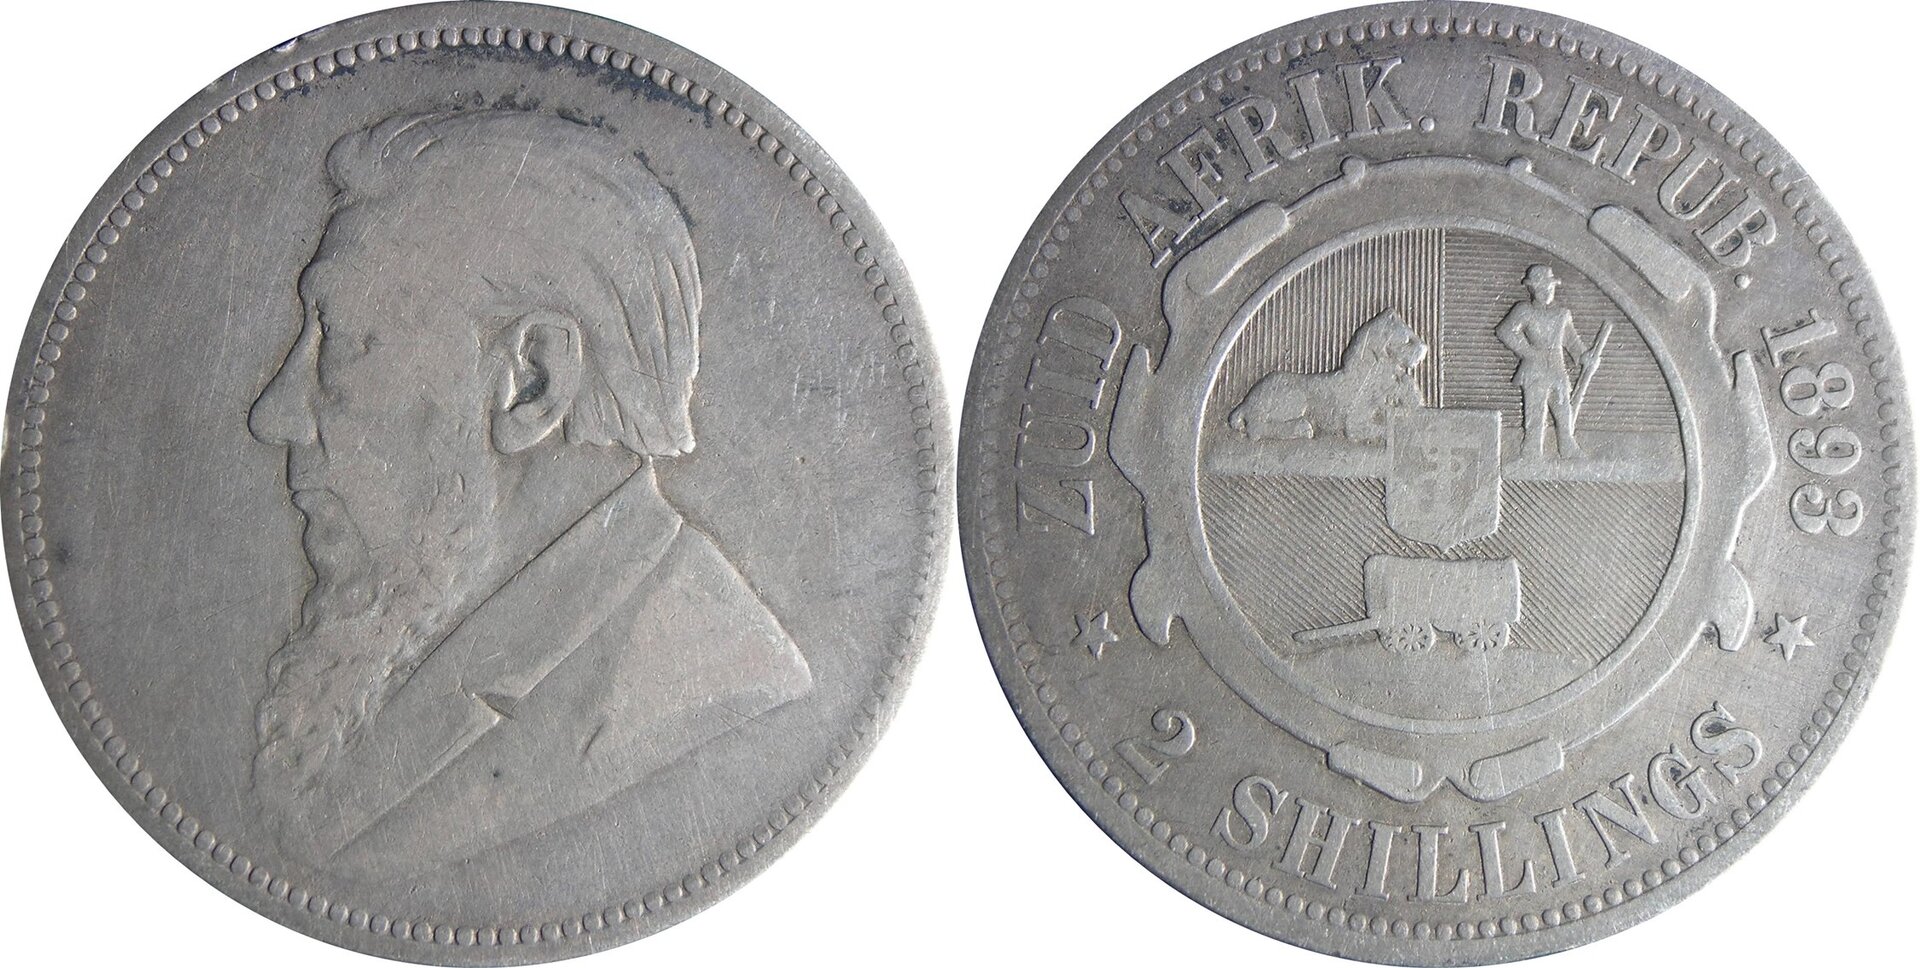 1893 ZAR 2 shilling.jpg